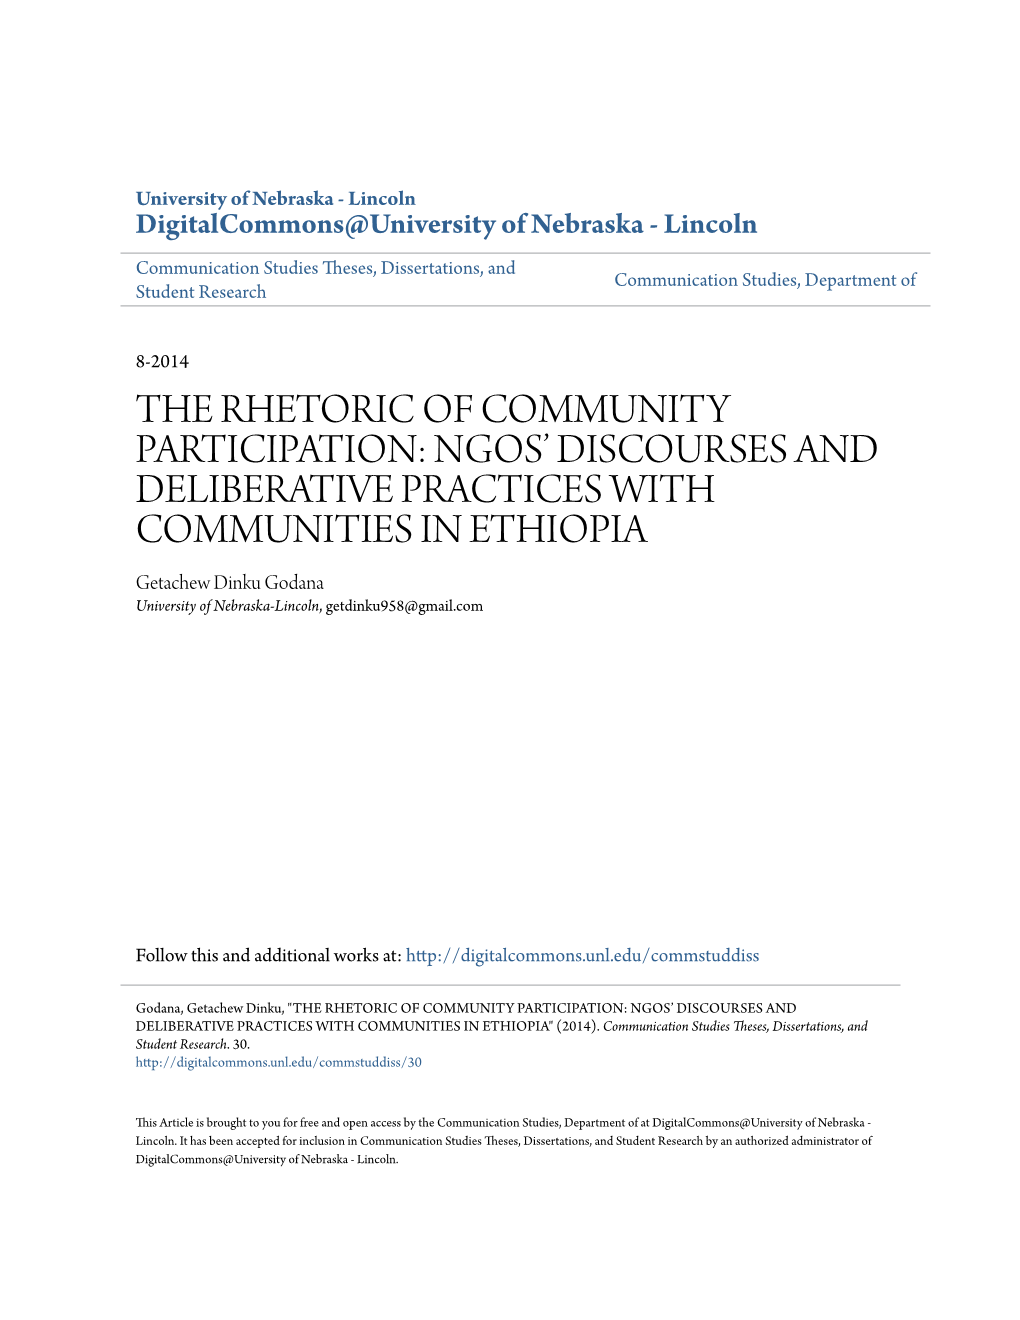 The Rhetoric of Community Participation